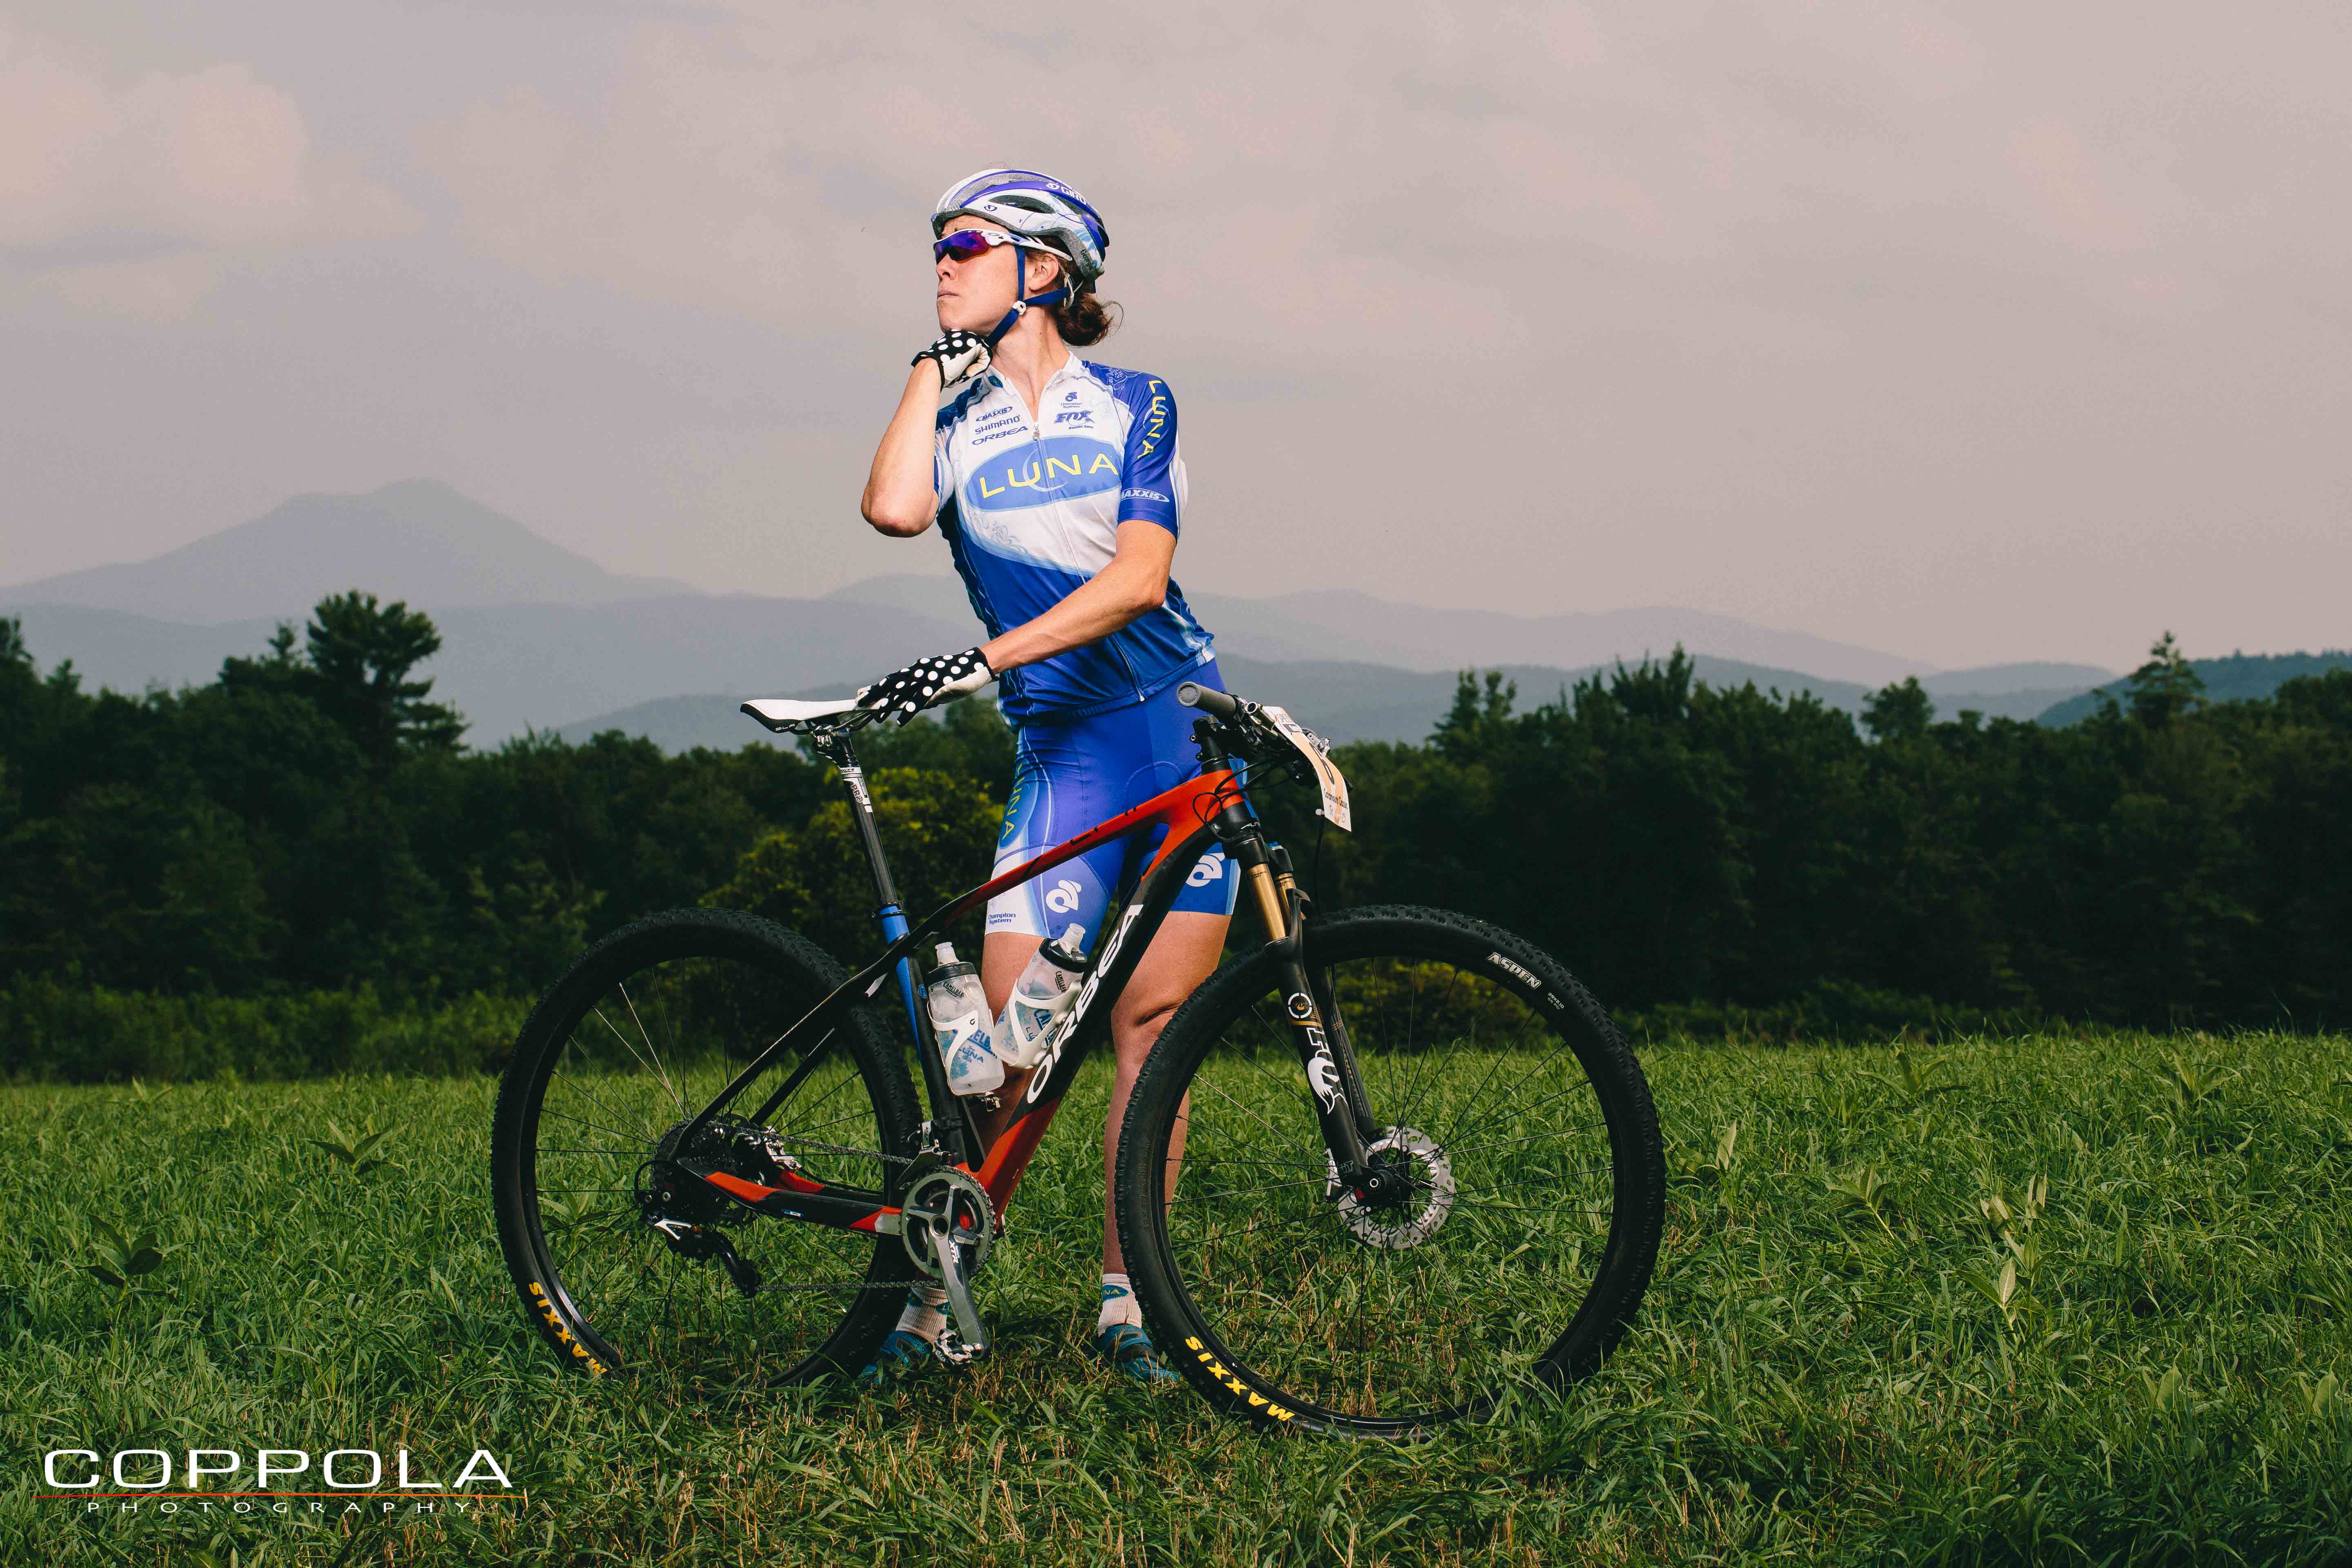 Coppola Photography: Georgia Gould 2x Olympian , Team Luna Chix. Great portrait pose for women mountain biking. athlete, athletics, race, sports, mountain bike images